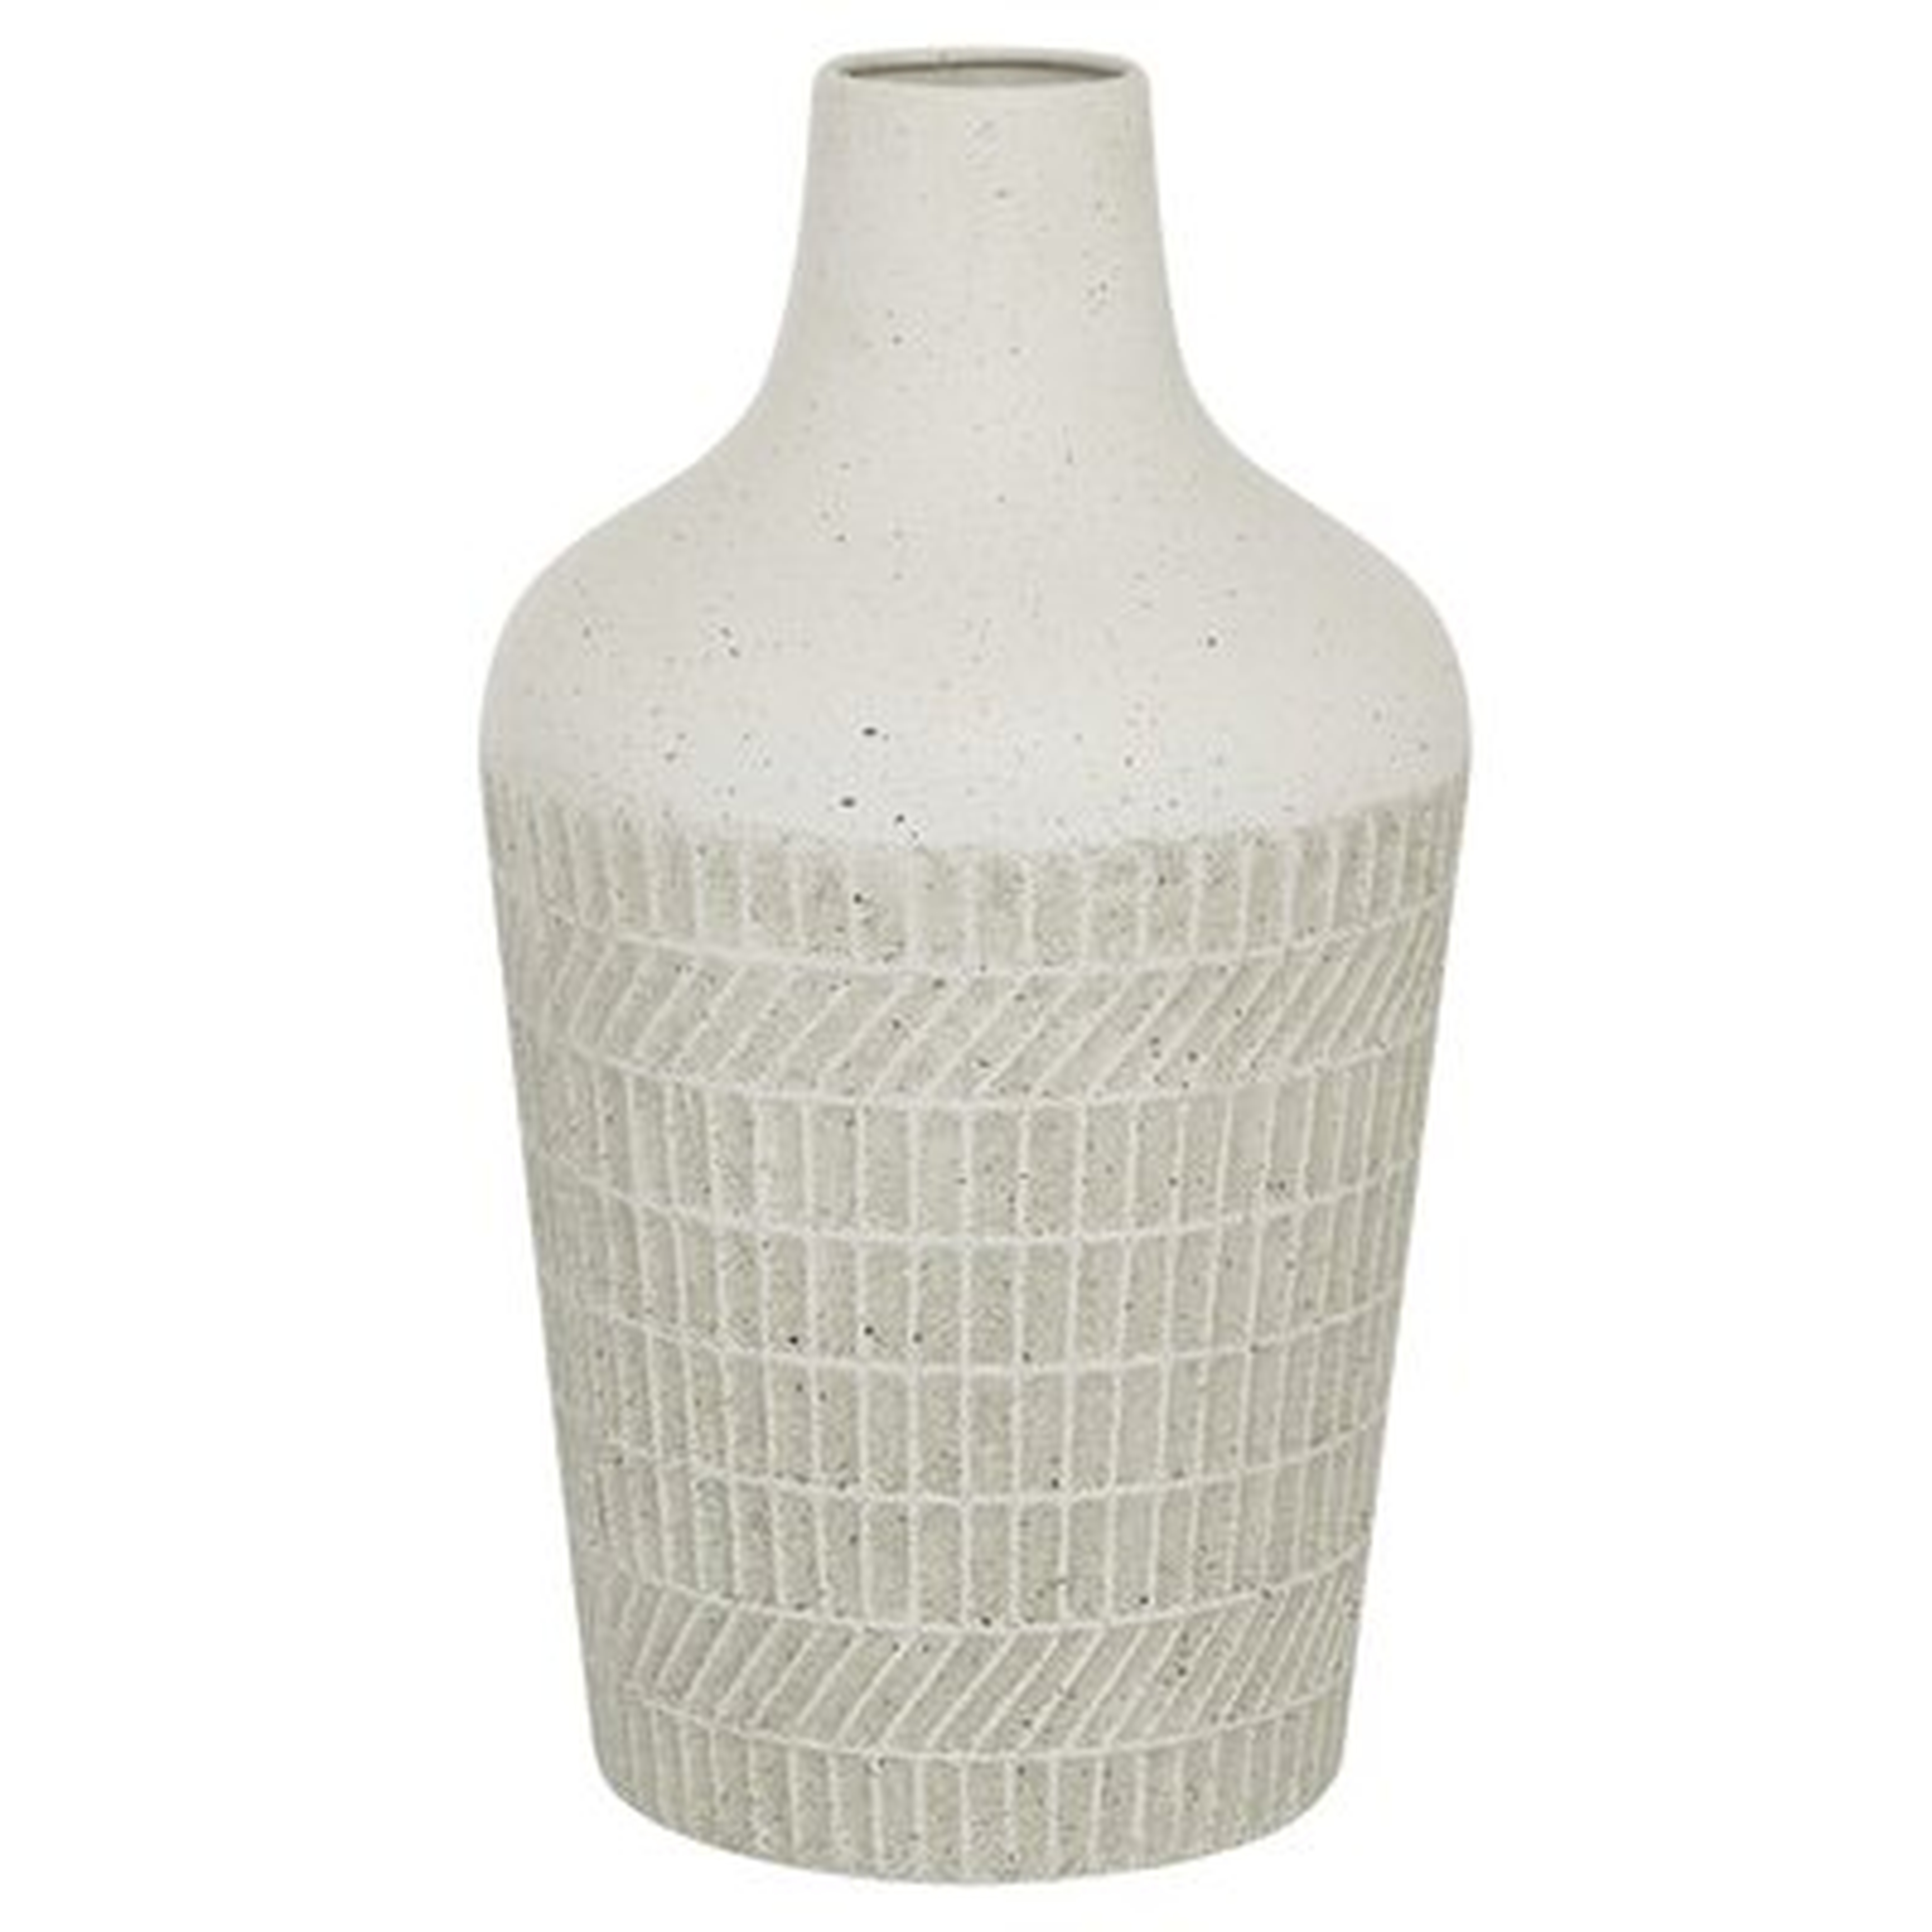 Lexington White Stainless Steel Table Vase, 13.4" - Wayfair